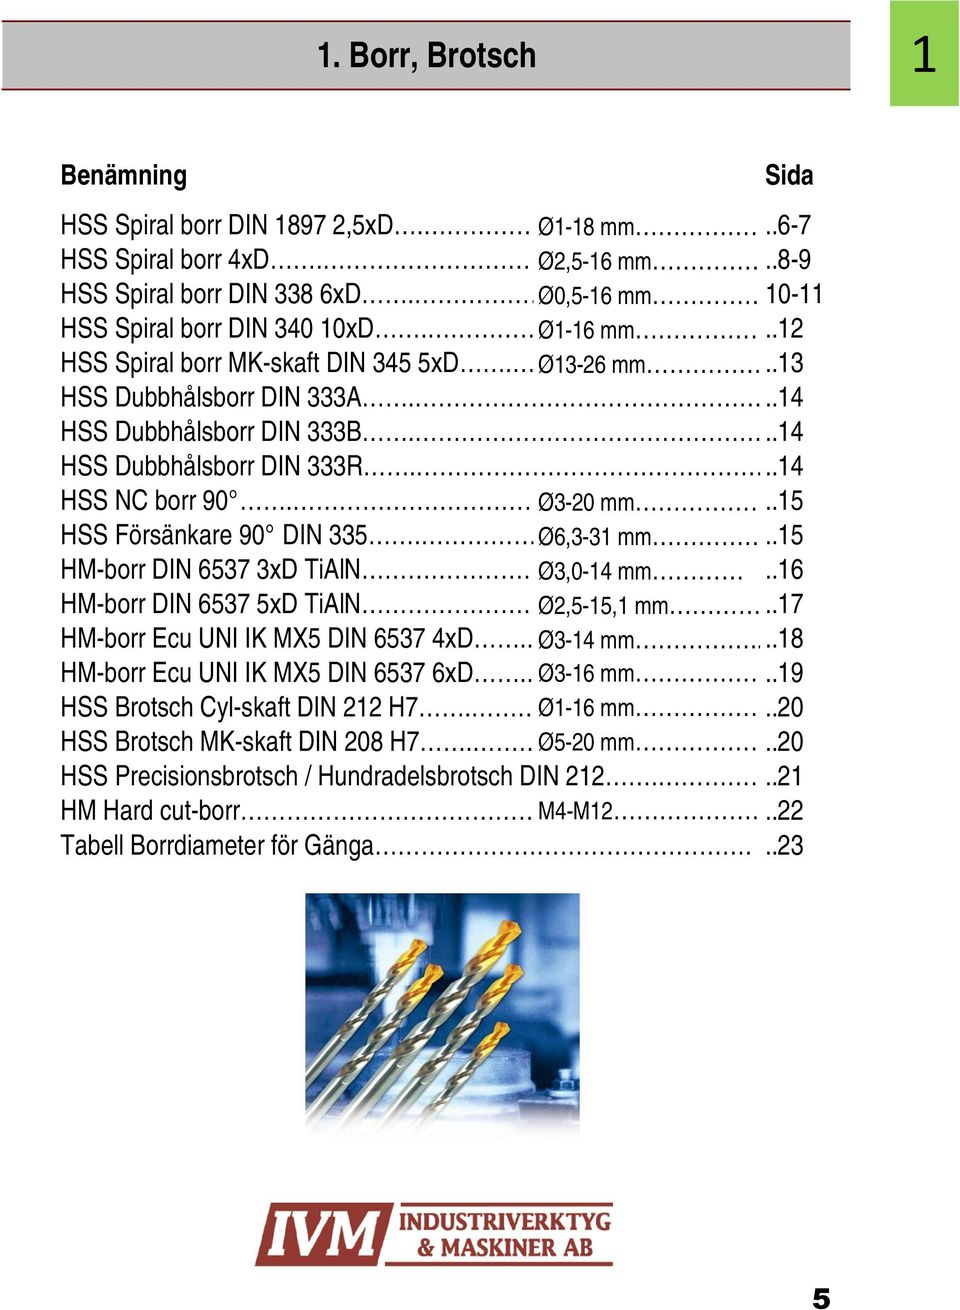 .15 HSS Försänkare 90 DIN 335. Ø6,3-31 mm..15 HM-borr DIN 6537 3xD TiAlN Ø3,0-14 mm..16 HM-borr DIN 6537 5xD TiAlN Ø2,5-15,1 mm..17 HM-borr Ecu UNI IK MX5 DIN 6537 4xD. Ø3-14 mm.